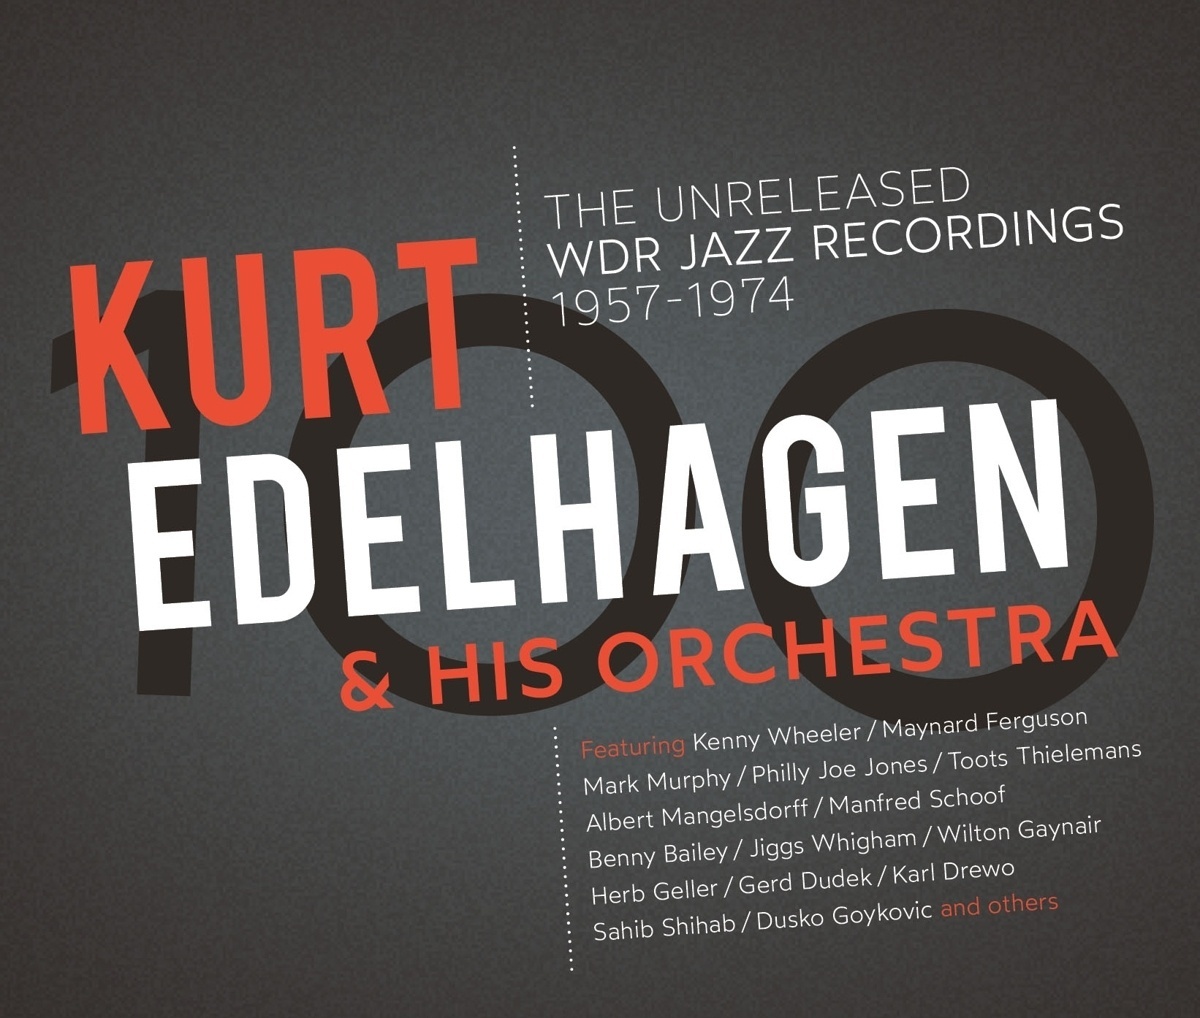 100-The Unreleased Wdr Jazz Recordings - Kurt Edelhagen & His Orchestra. (CD)